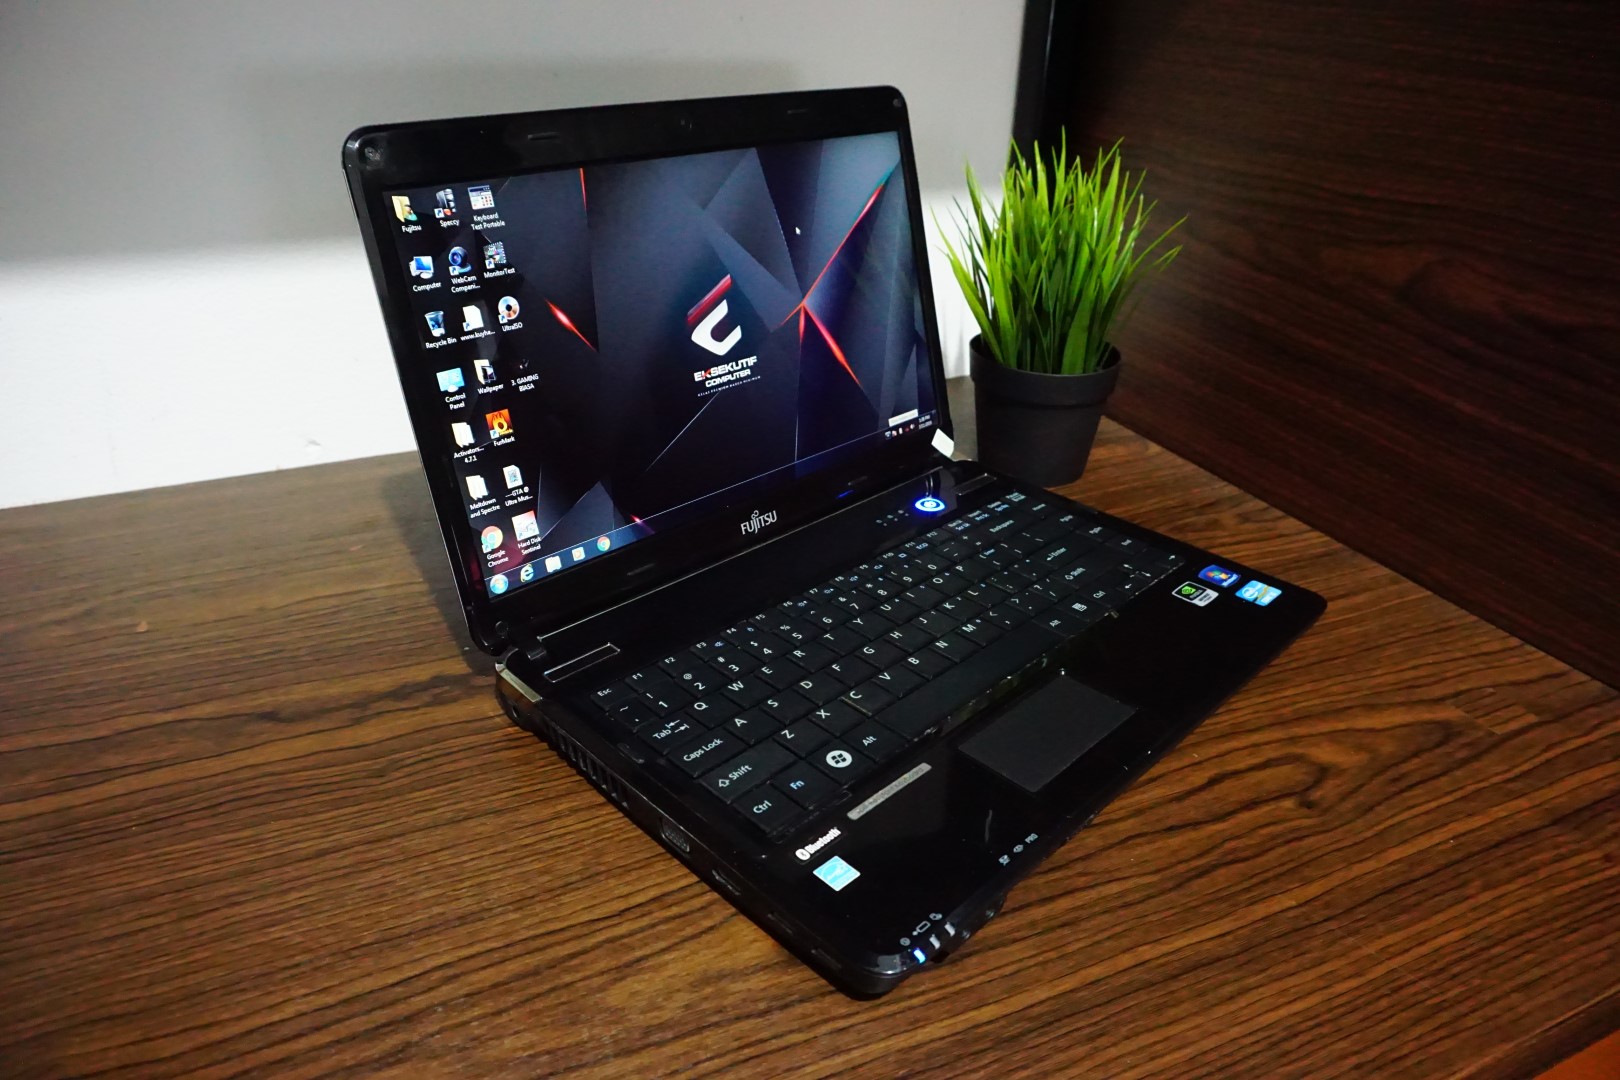 Jual Laptop Fujitsu Lifebook LH531 Core i5 Black